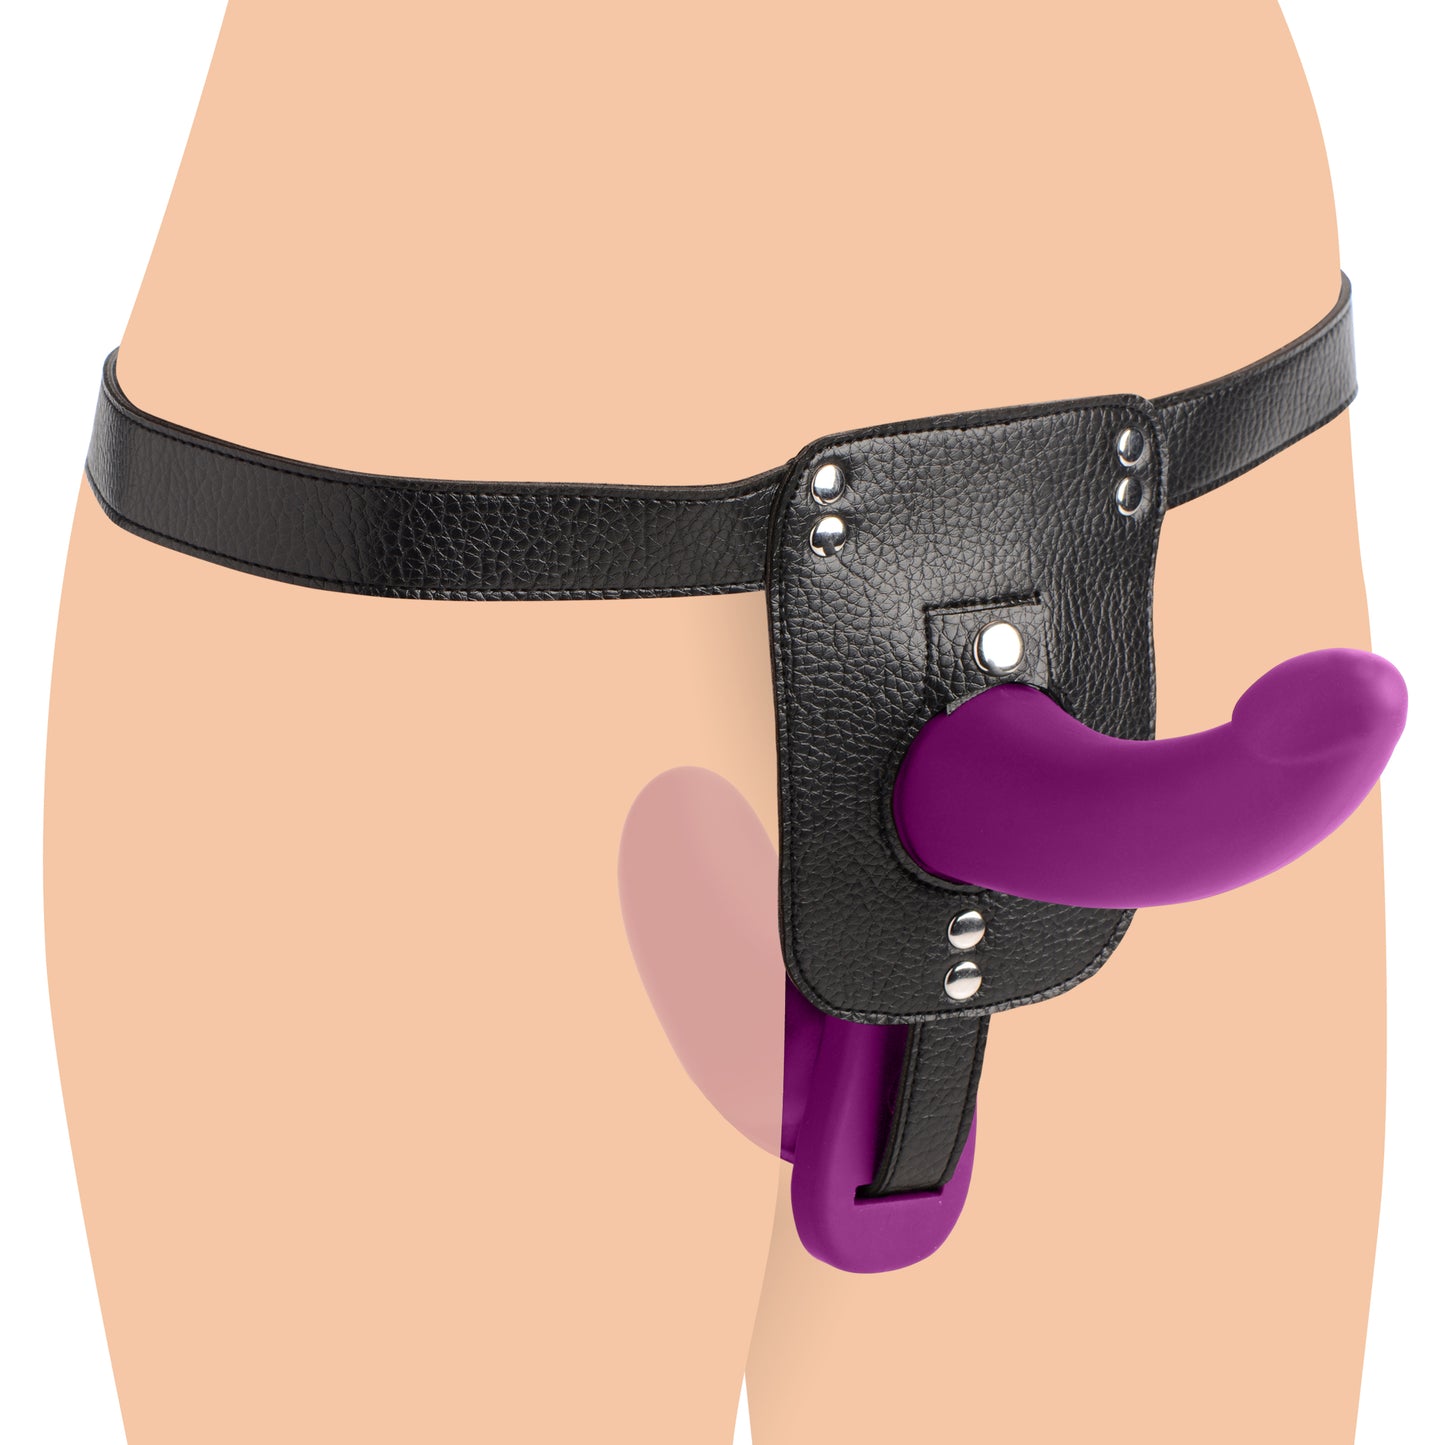 Double Take 10X Double Penetration Vibrating Strap-on Harness - Purple - UABDSM